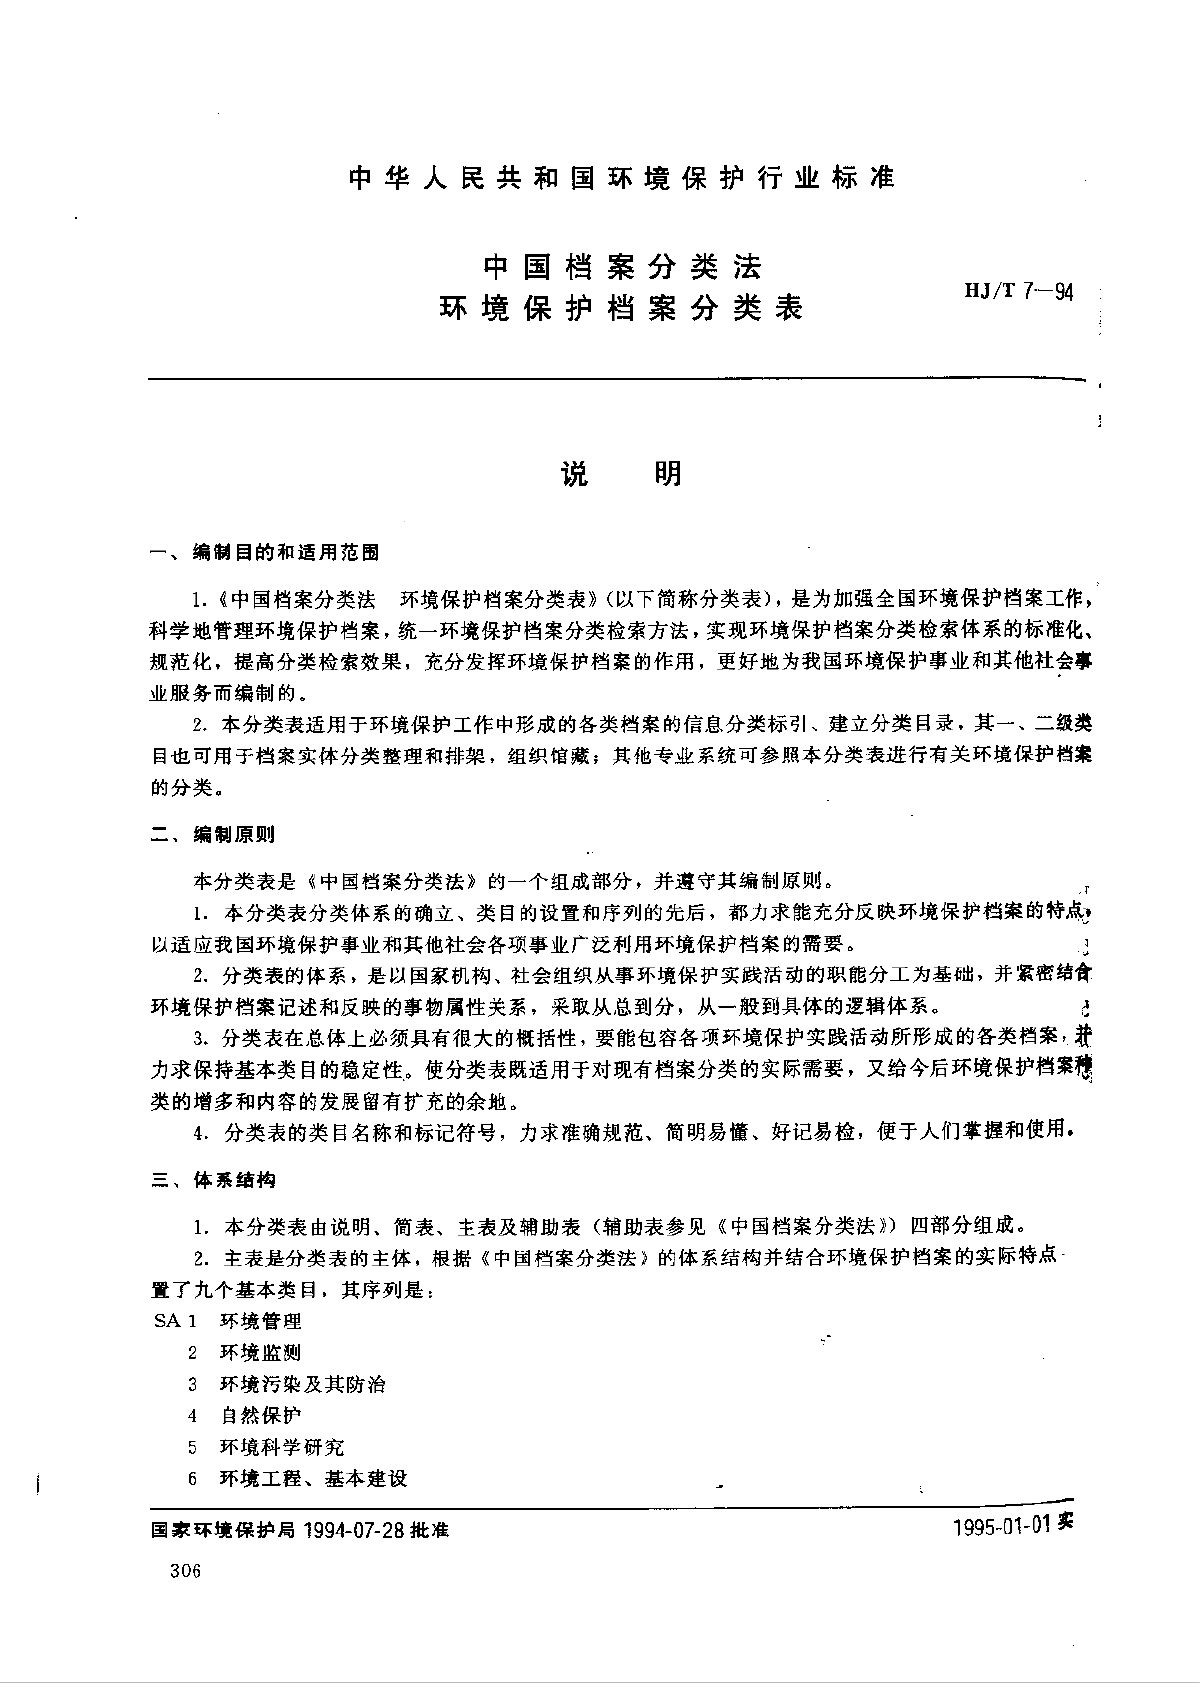 HJ_T 7-94 中国档案分类法 环境保护档案分类表-图一